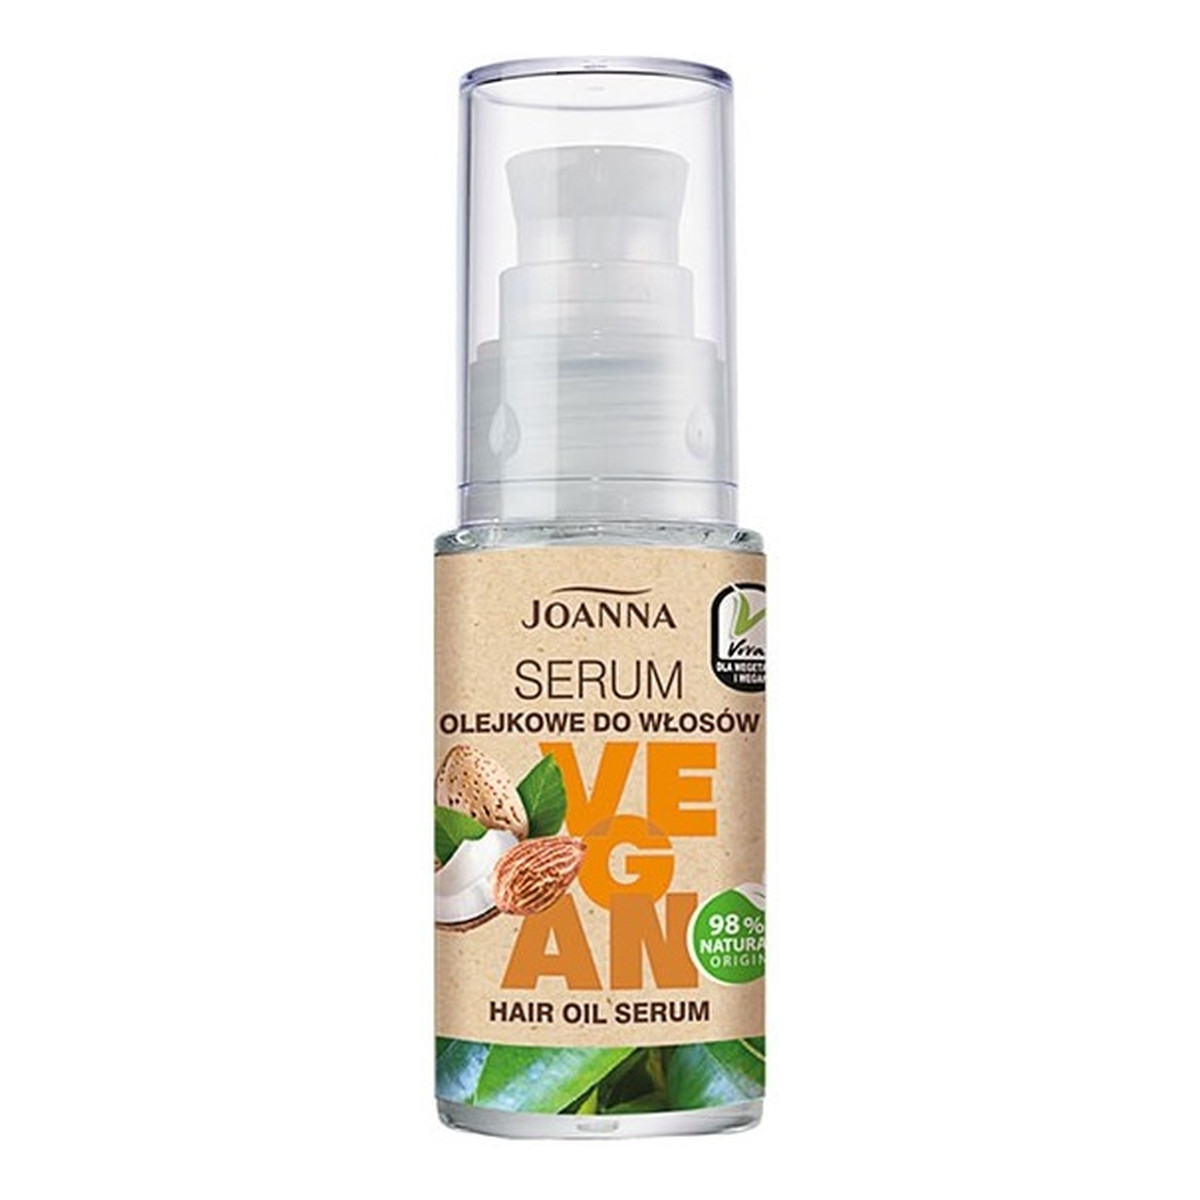 Joanna Vegan Hair Oil Serum olejkowe serum do włosów 30ml